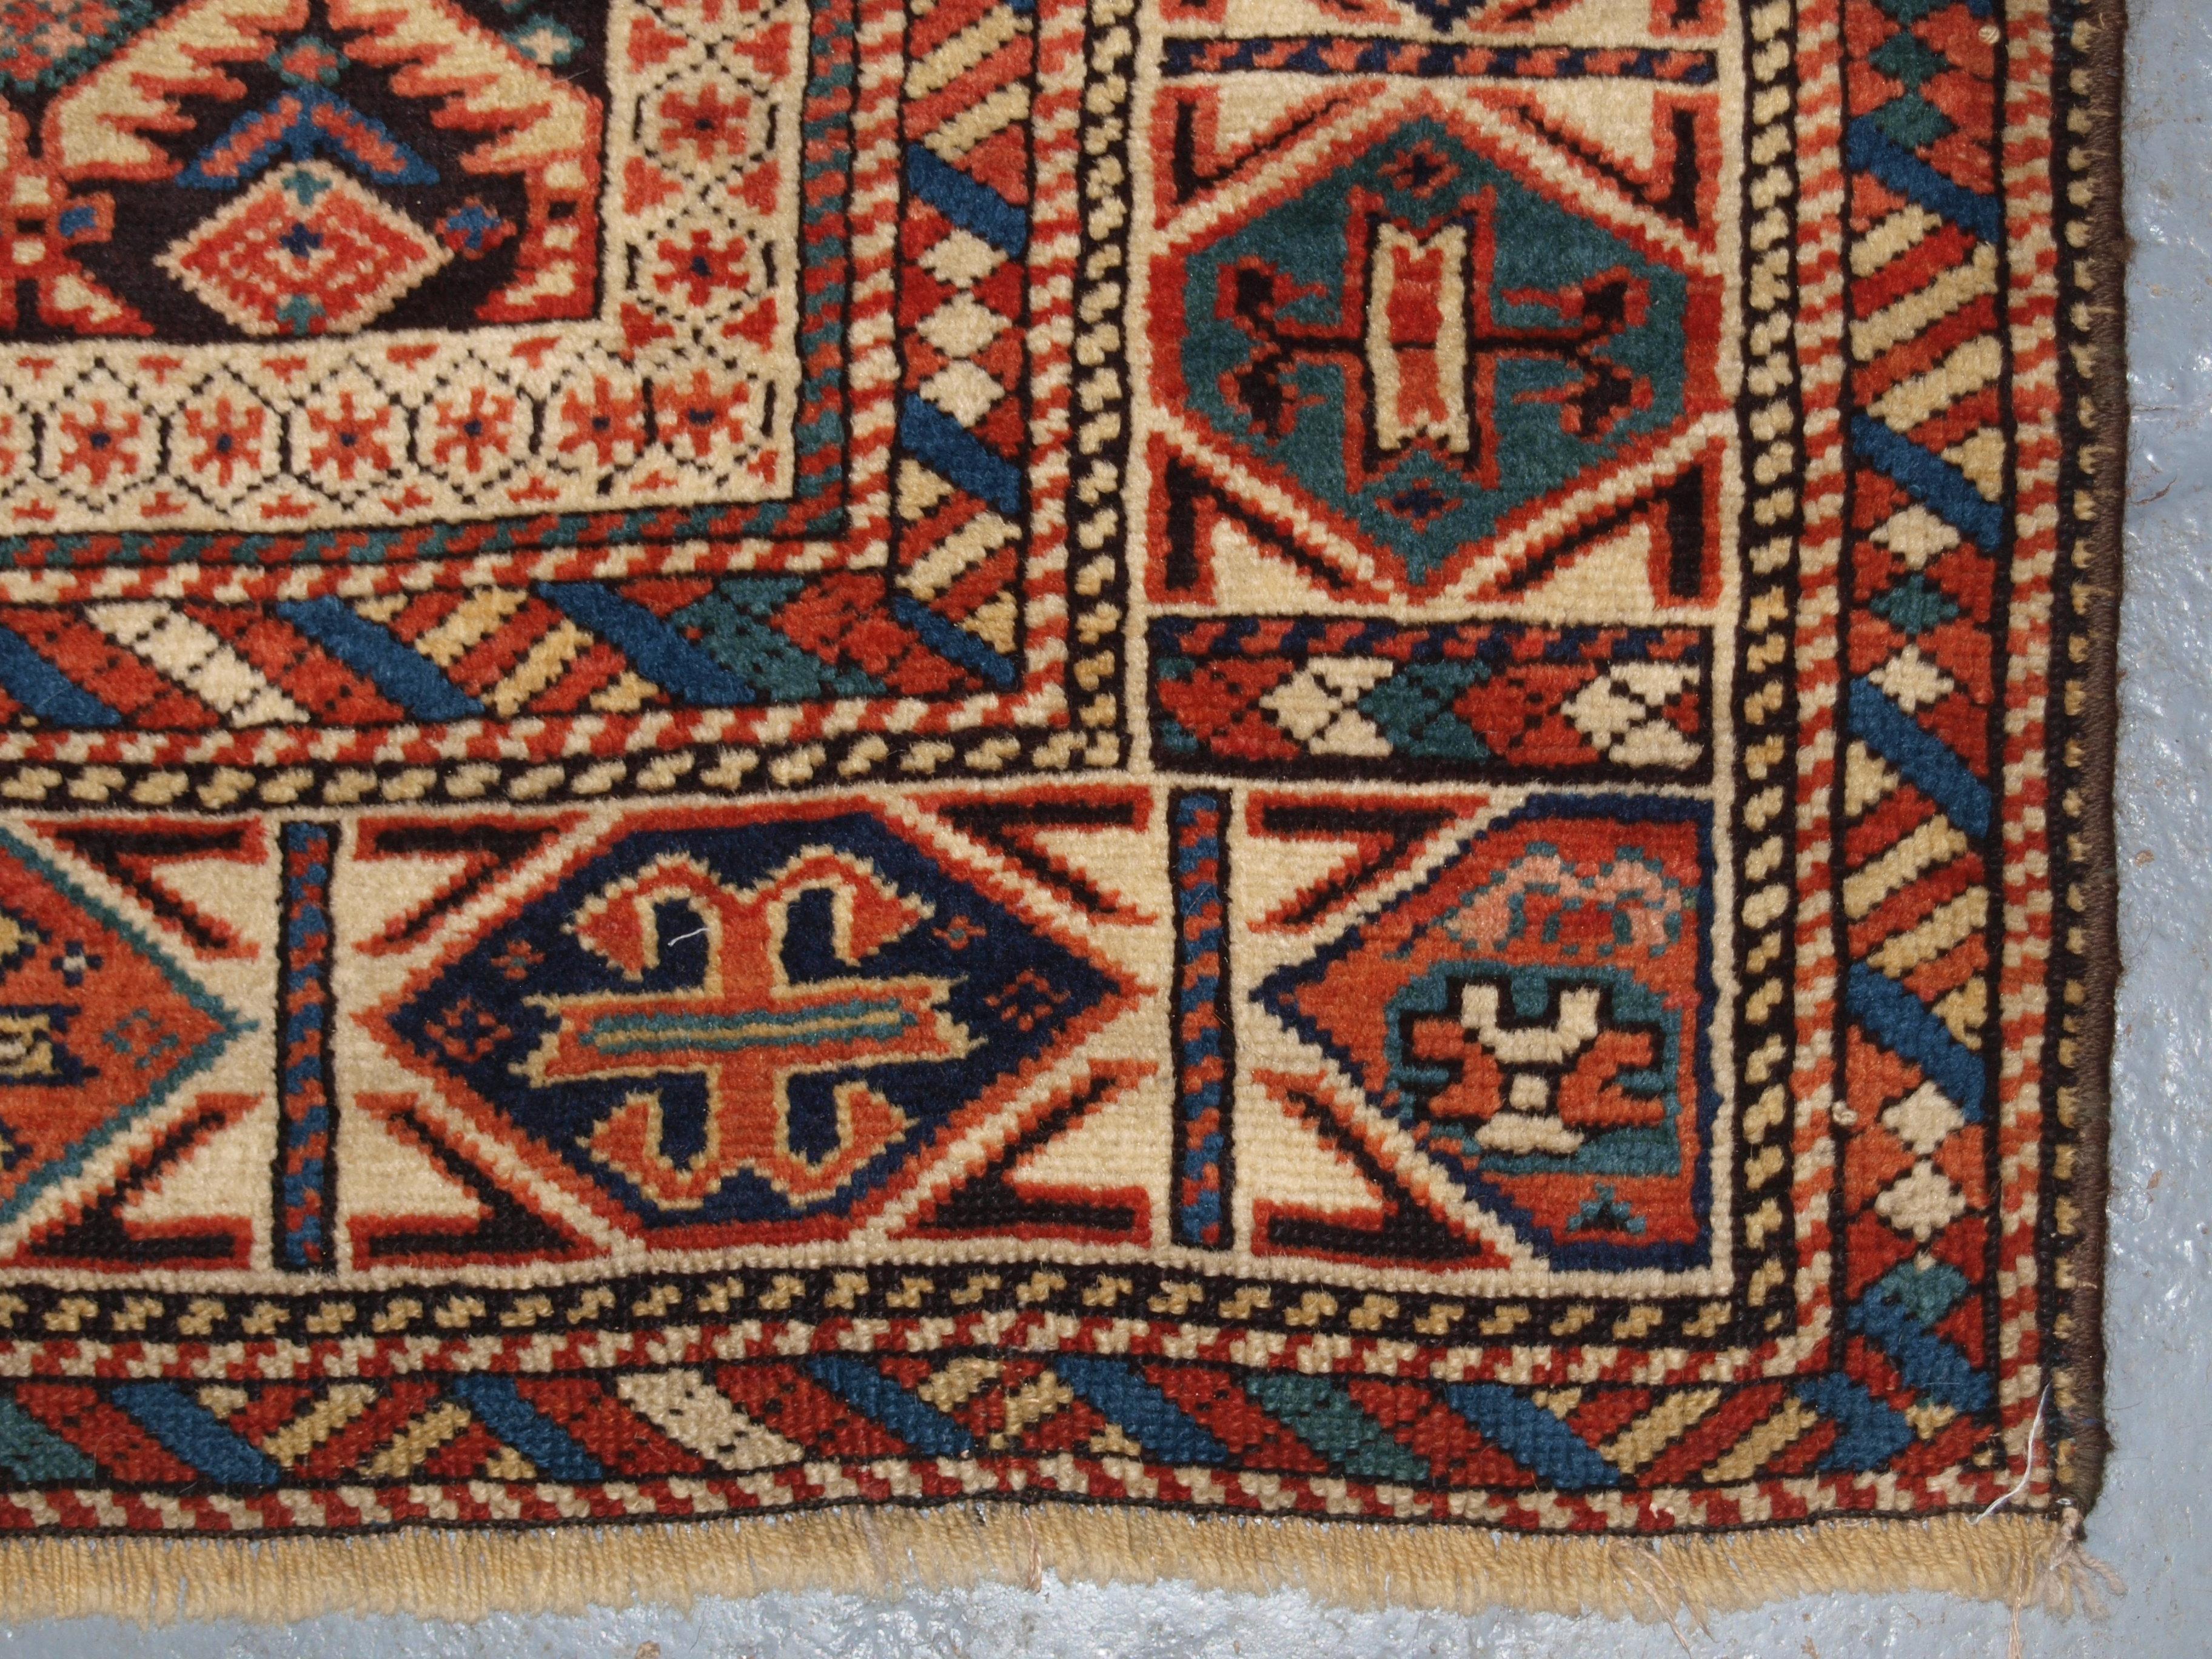 Antique Caucasian Dagestan Rug with Lattice Design on Dark Charcoal Ground 6